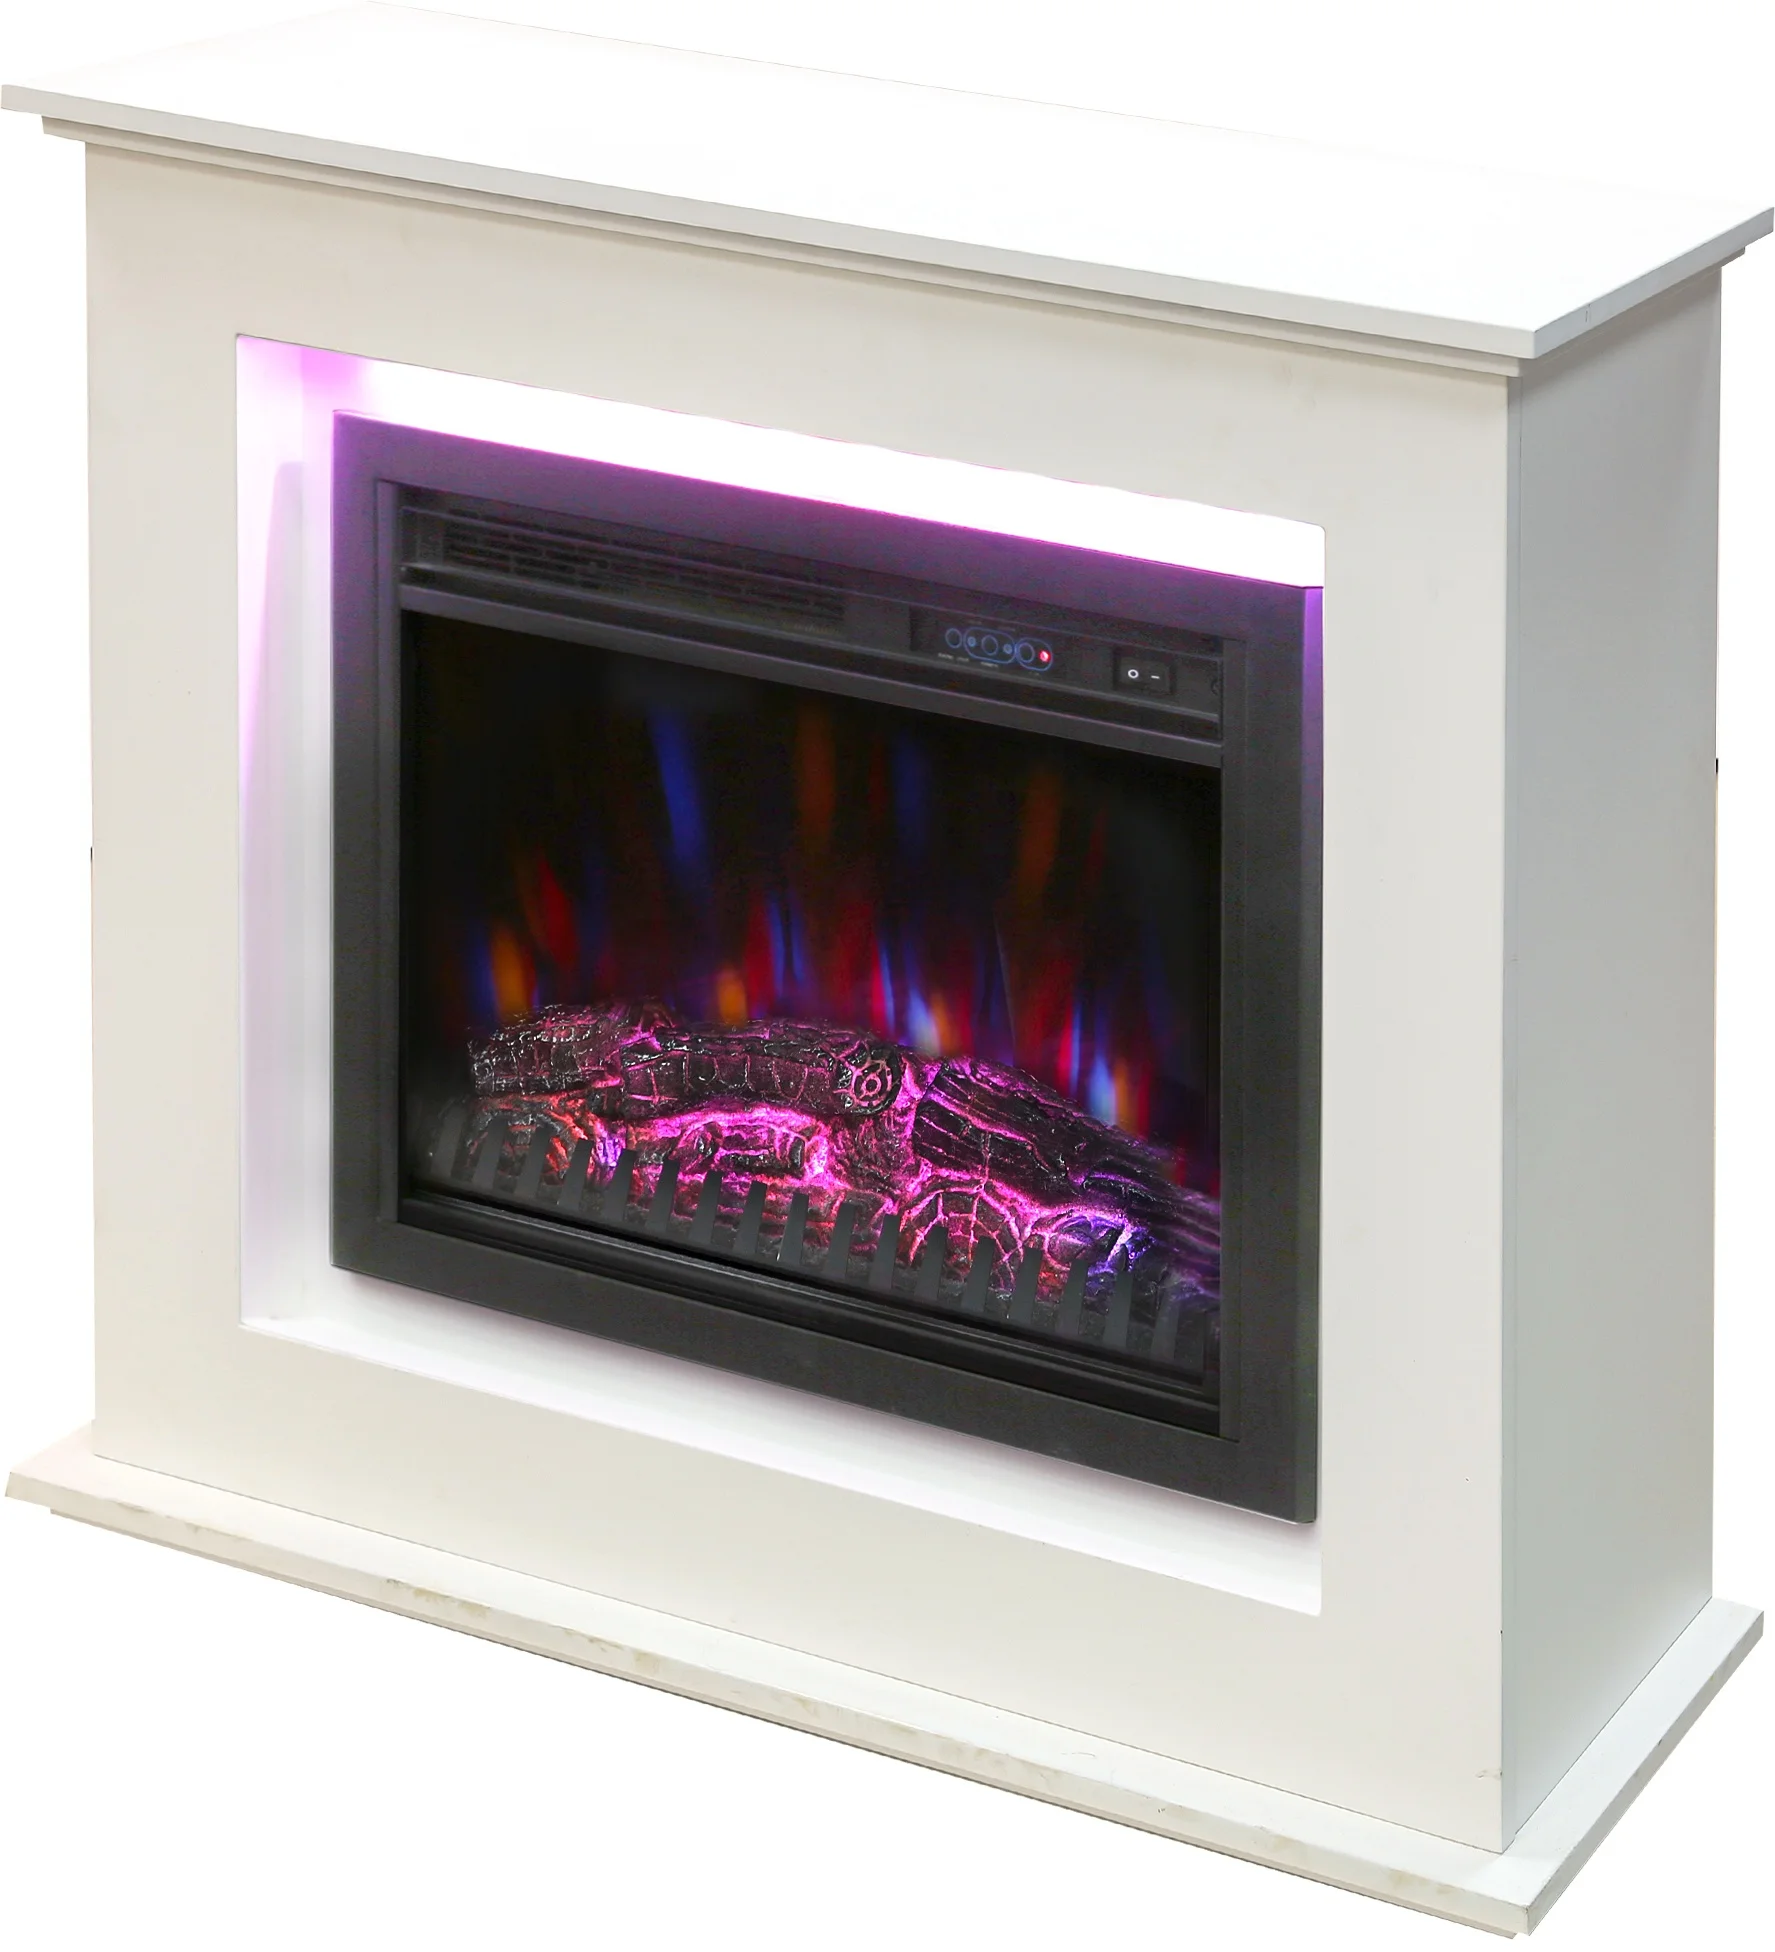 Freestanding indoor heater  Insert log flame effect electric fireplace mantel